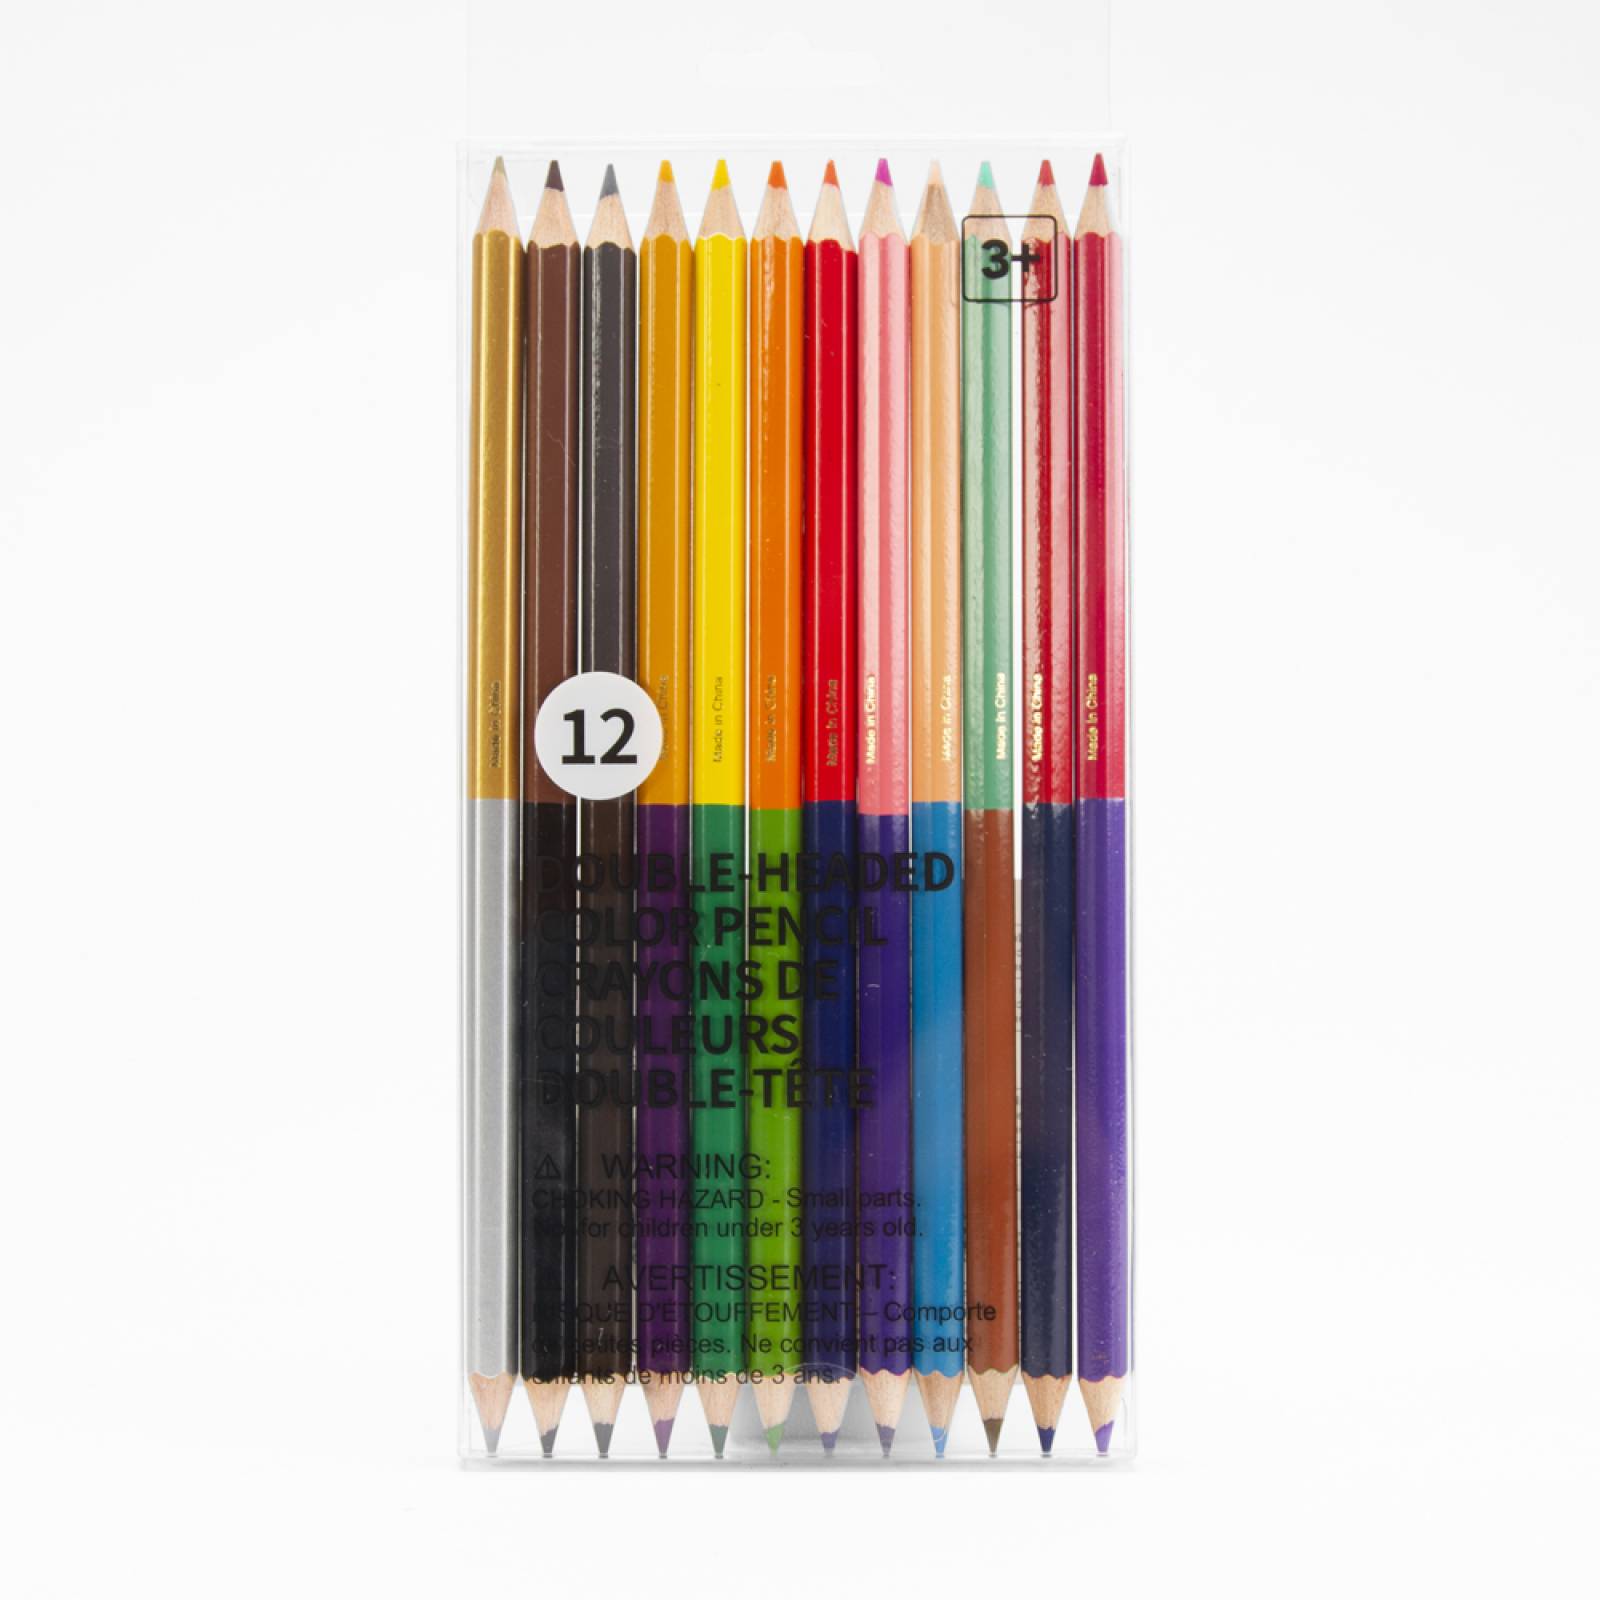 Miniso Paquete Lápices De Colores 17 5 cm 12 Piezas